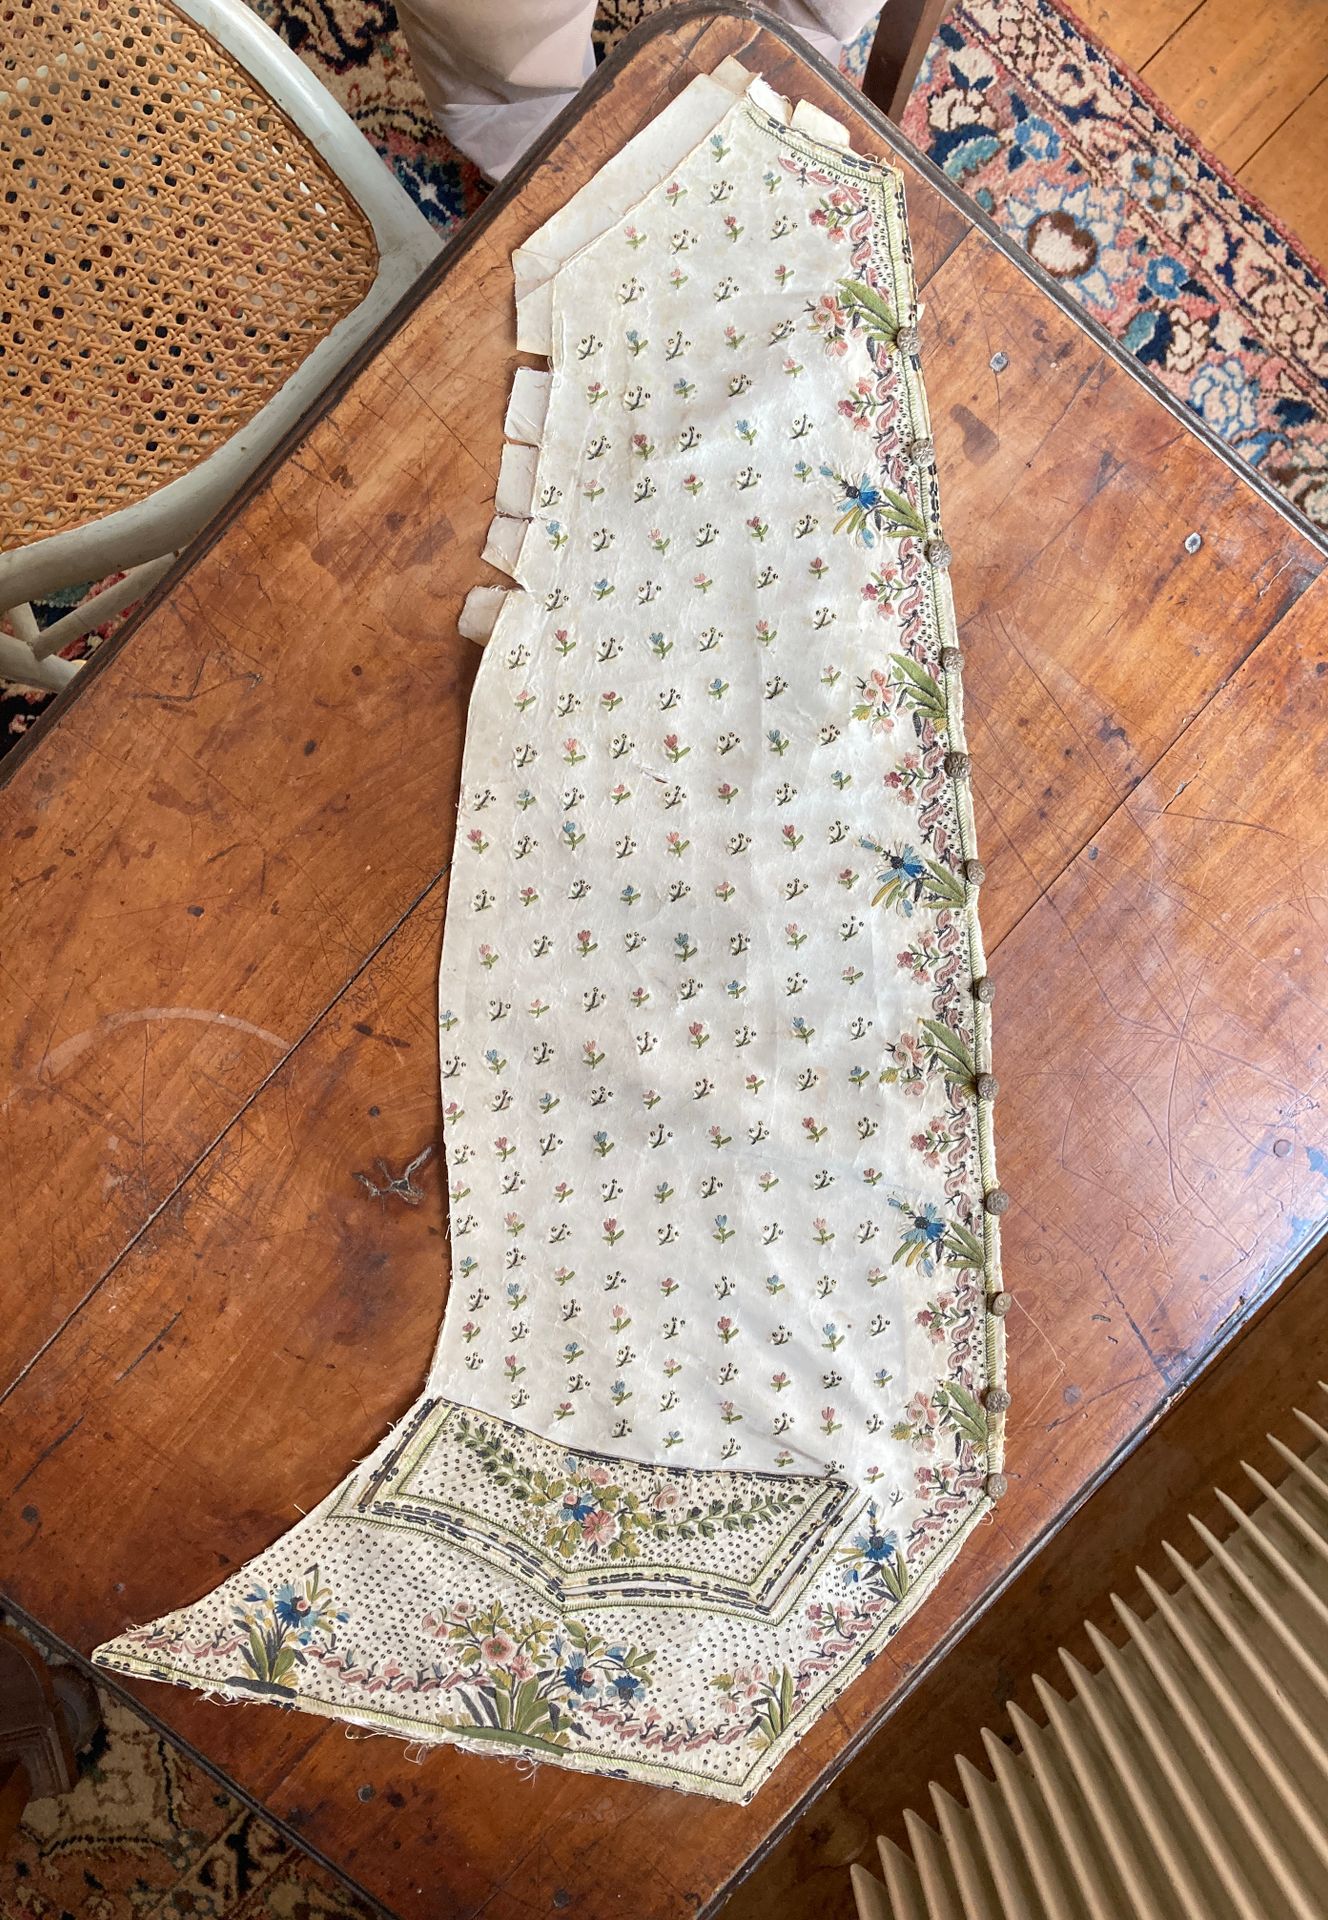 Null 150. 一件18世纪的丝绸马甲的两部分。

显著的磨损和撕裂。